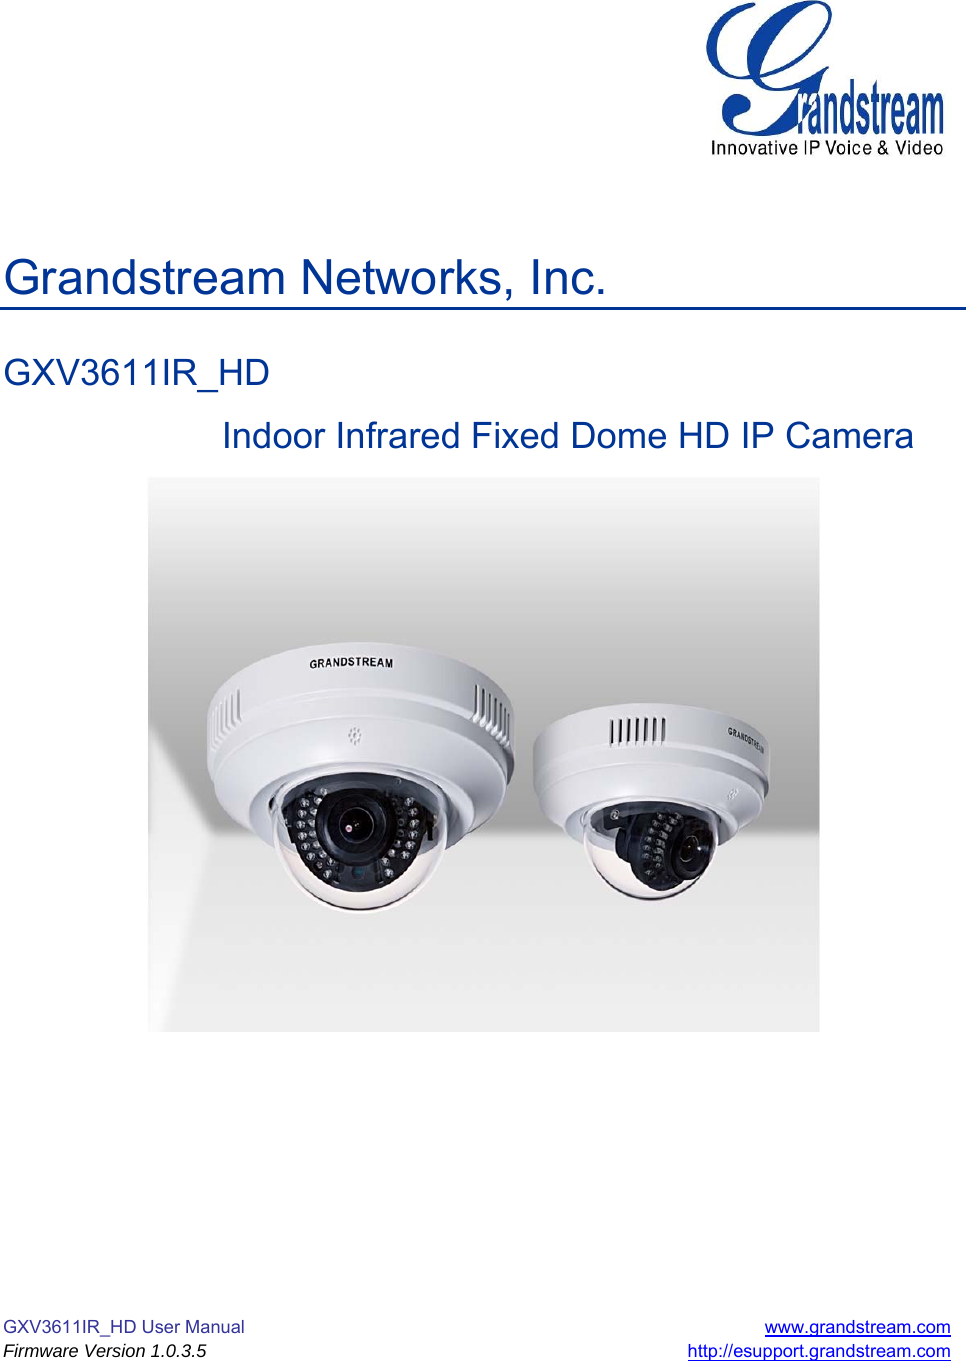 GXV3611IR_HD User Manual  www.grandstream.com Firmware Version 1.0.3.5 http://esupport.grandstream.com     Grandstream Networks, Inc.  GXV3611IR_HD        Indoor Infrared Fixed Dome HD IP Camera    